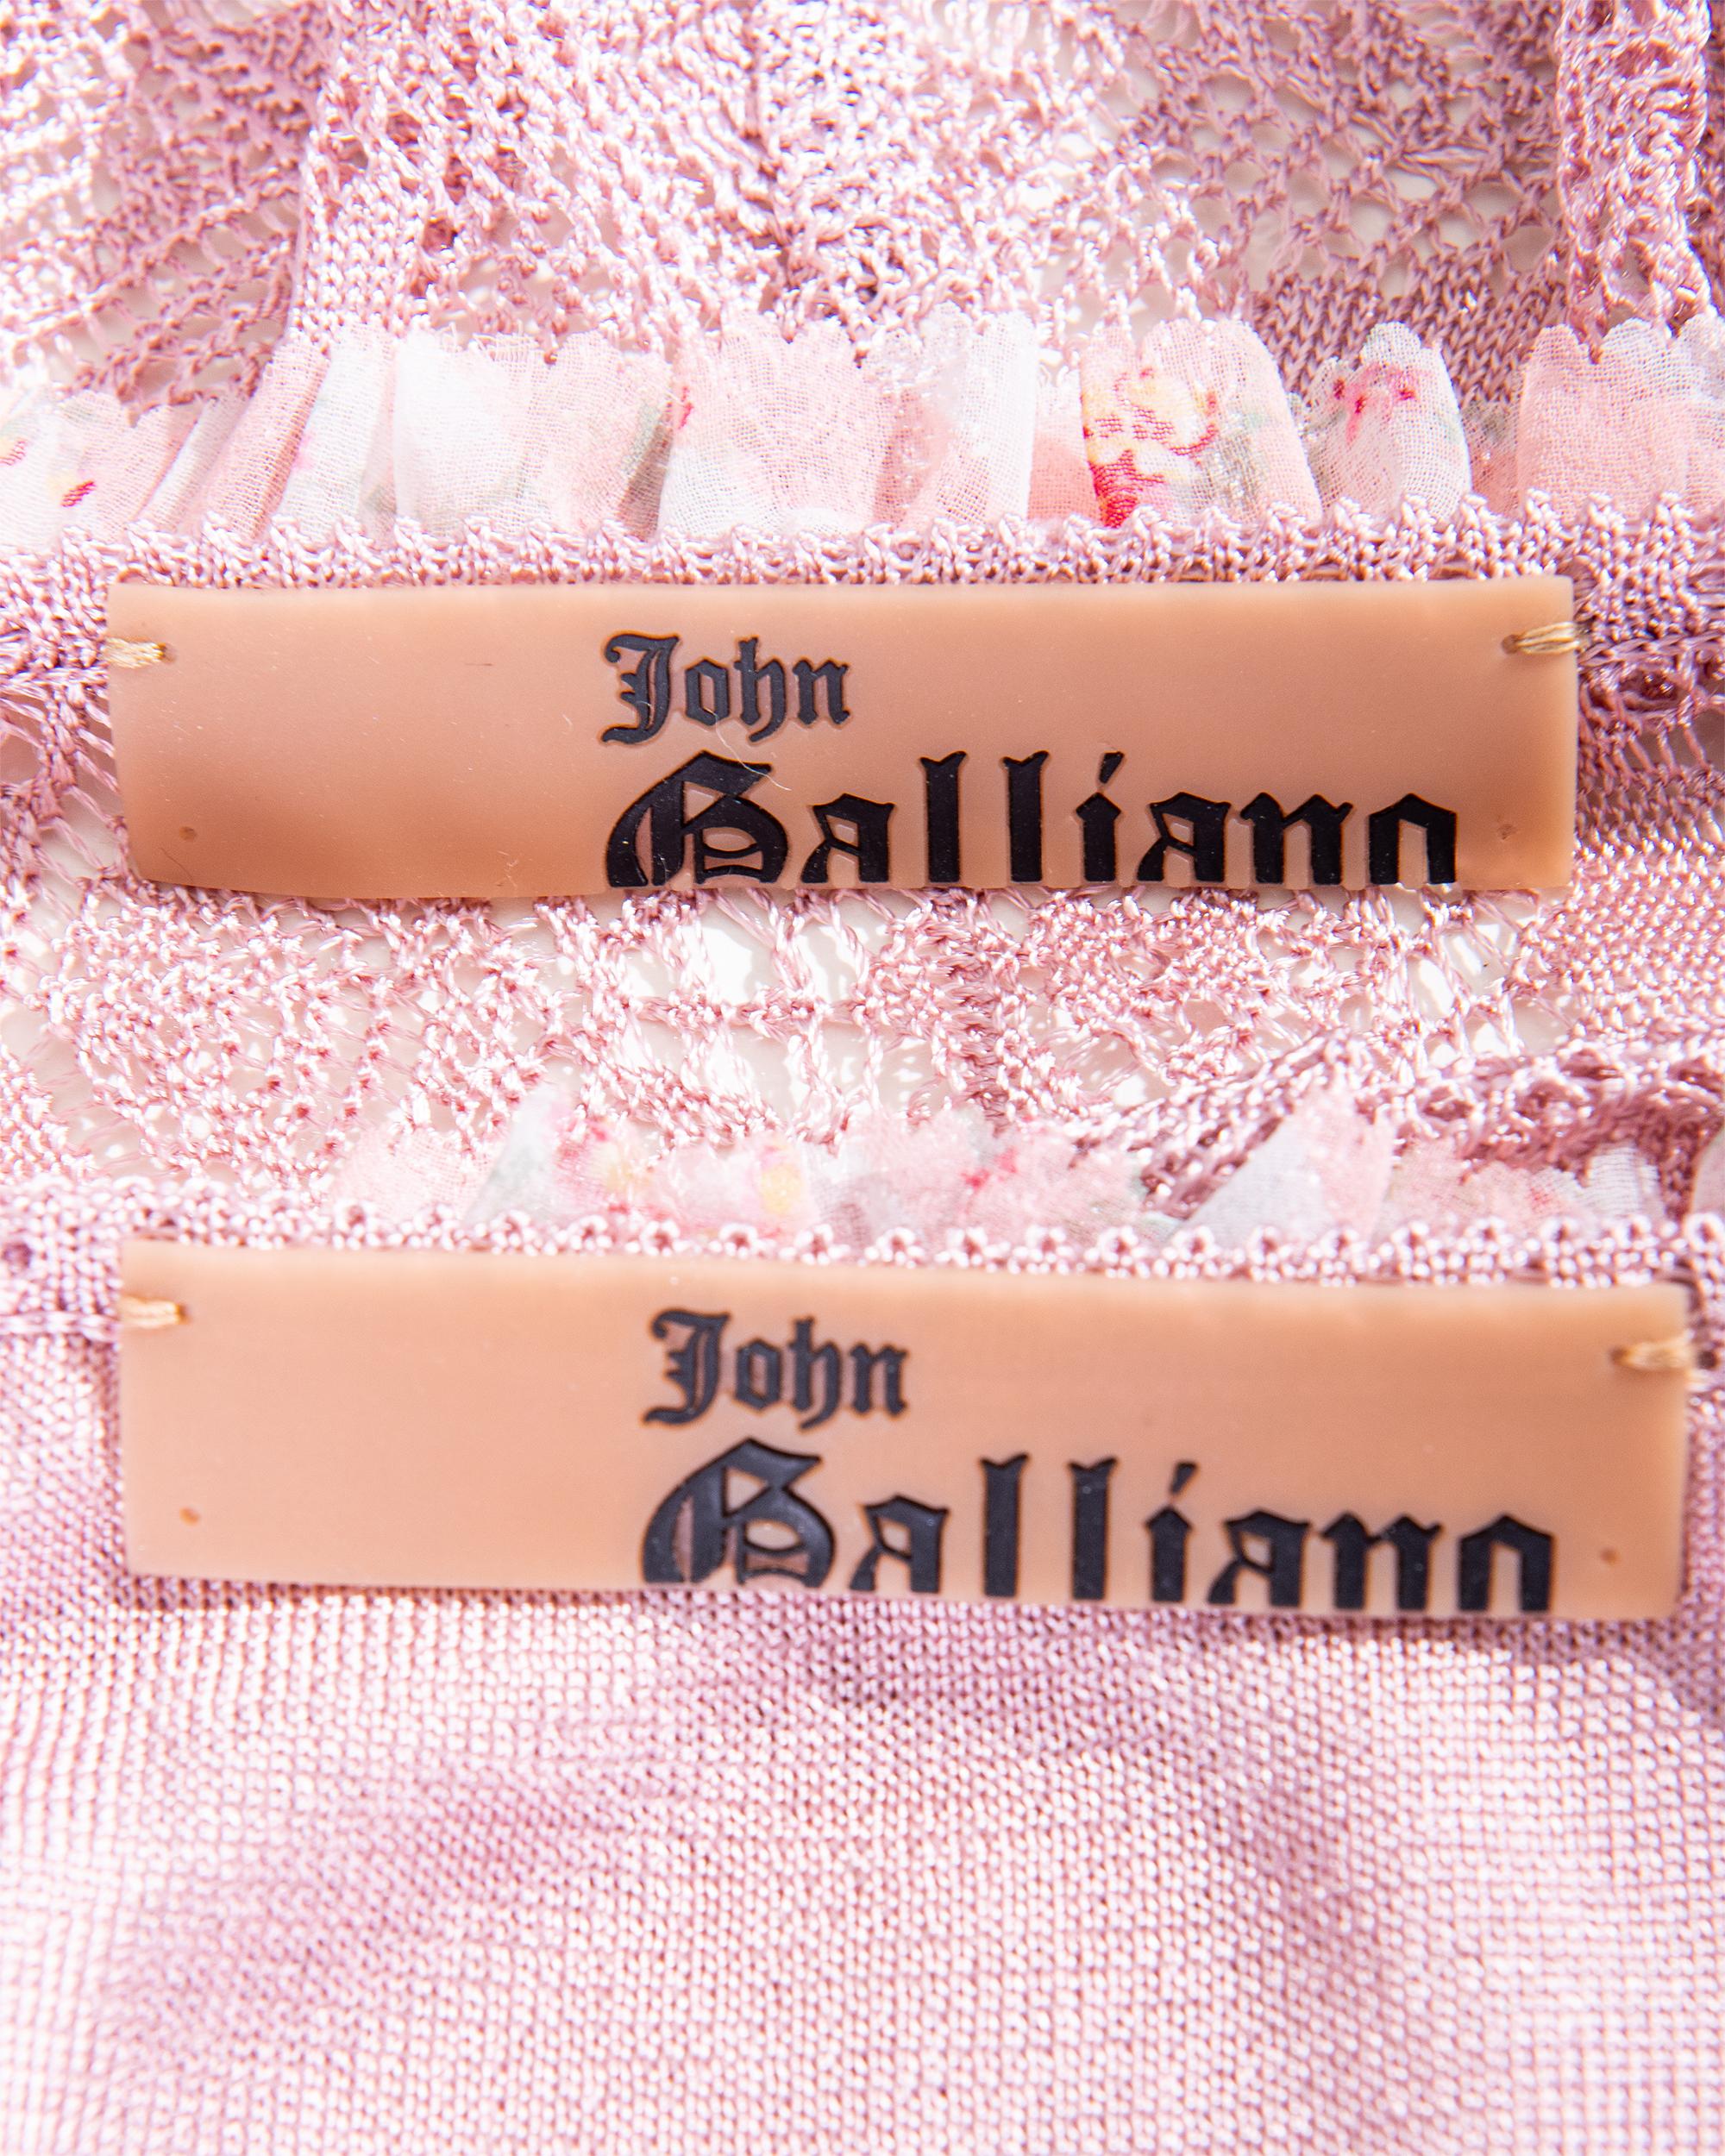 S/S 2004 John Galliano Three-Piece Floral Print Cardigan, Tank Top and Skirt Set 15